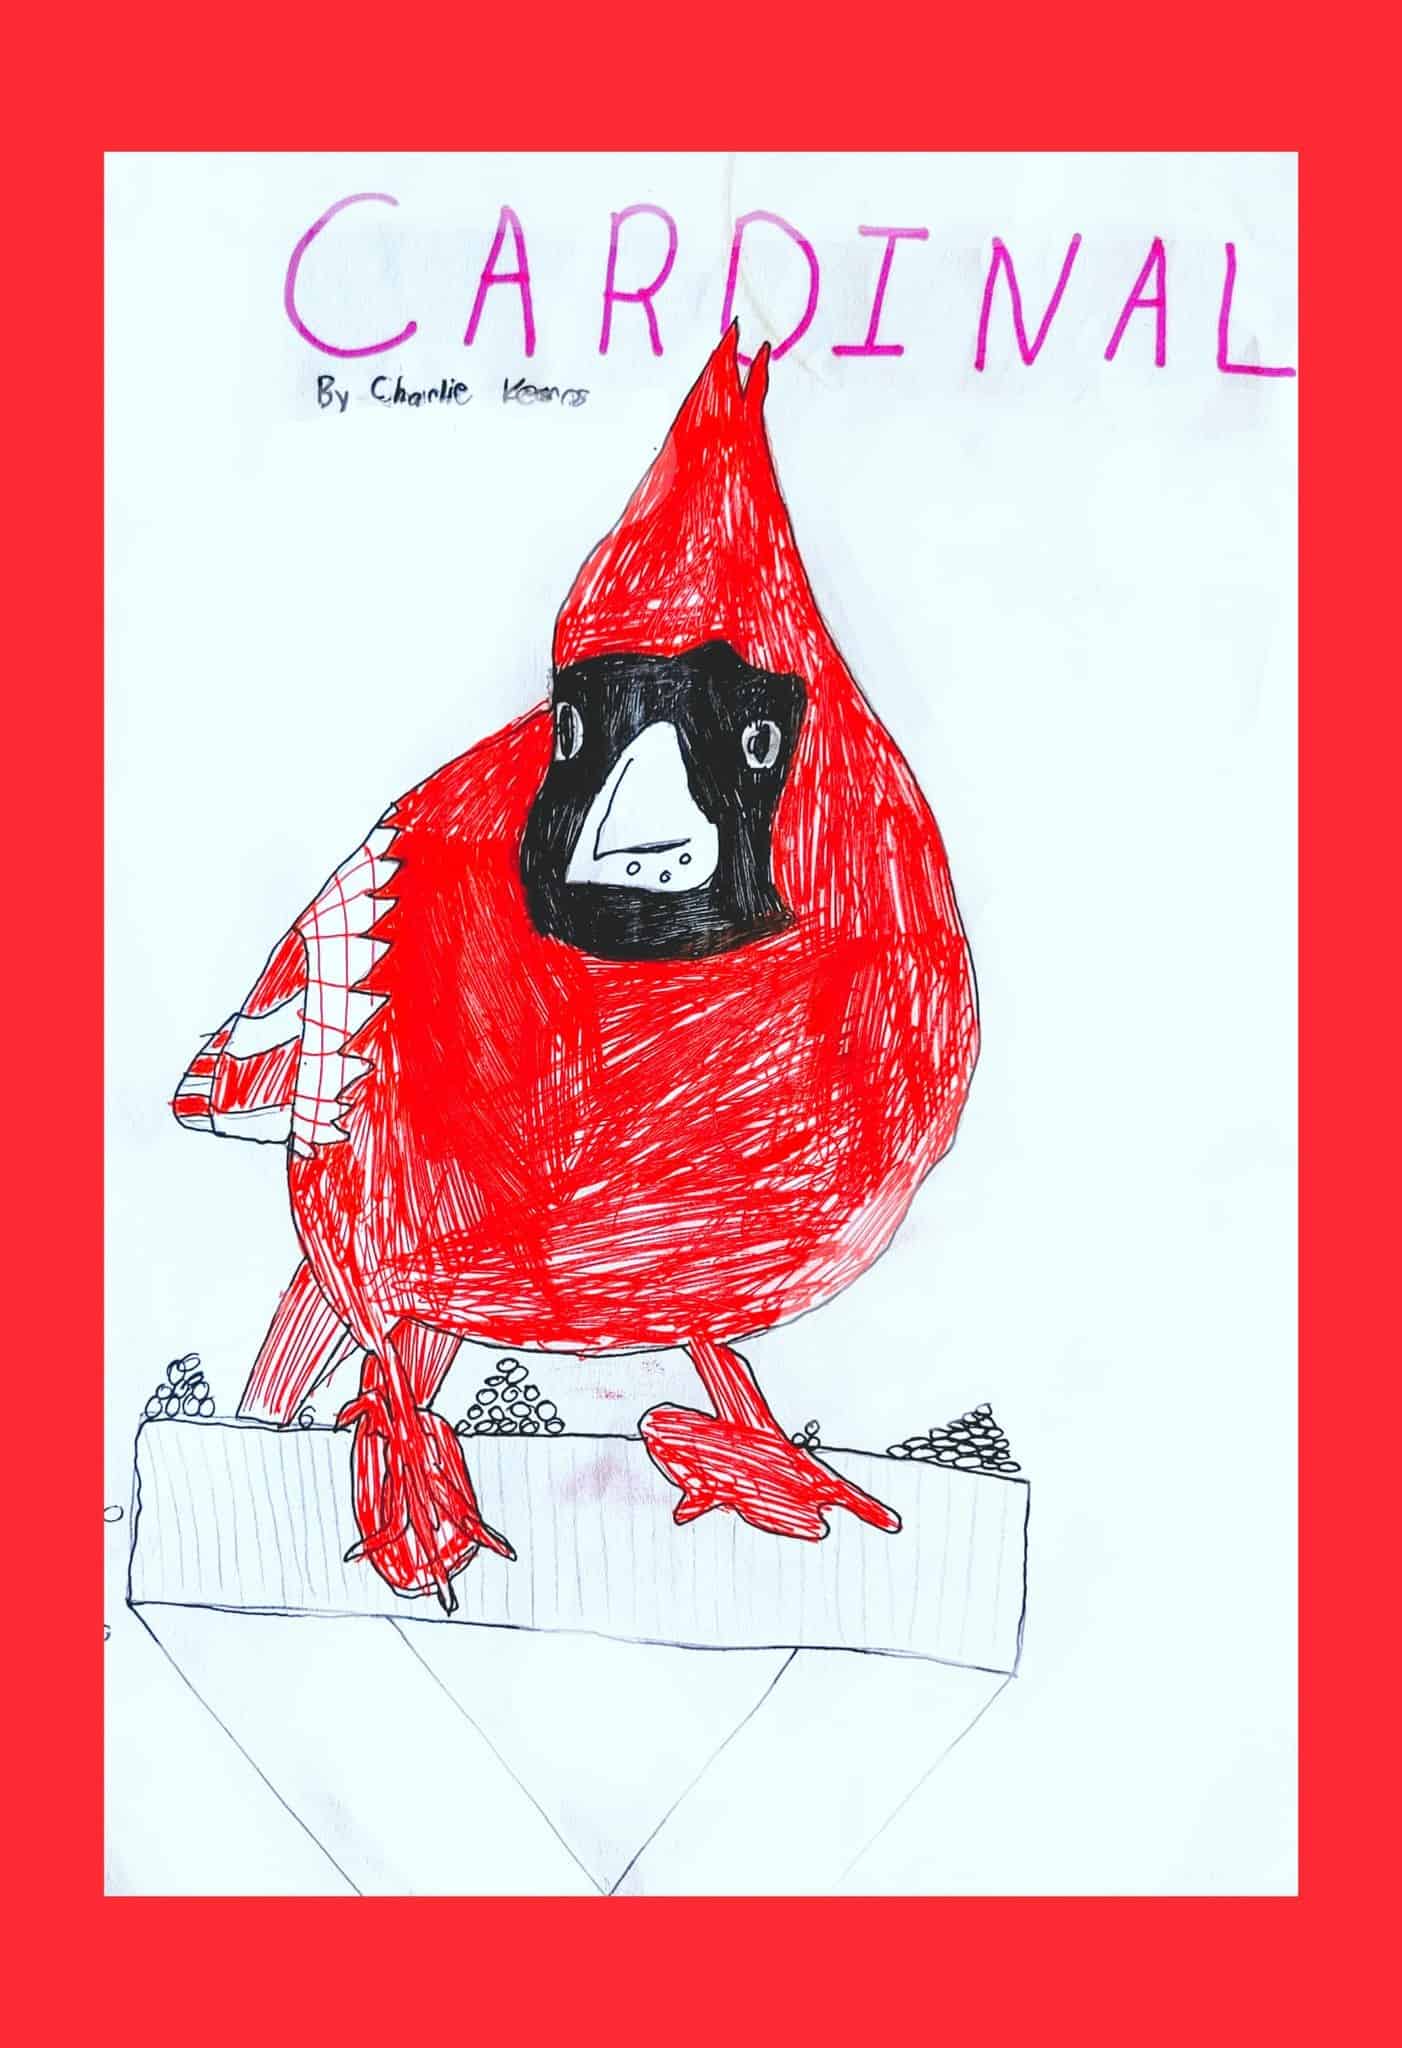 Charlie - Cardinal